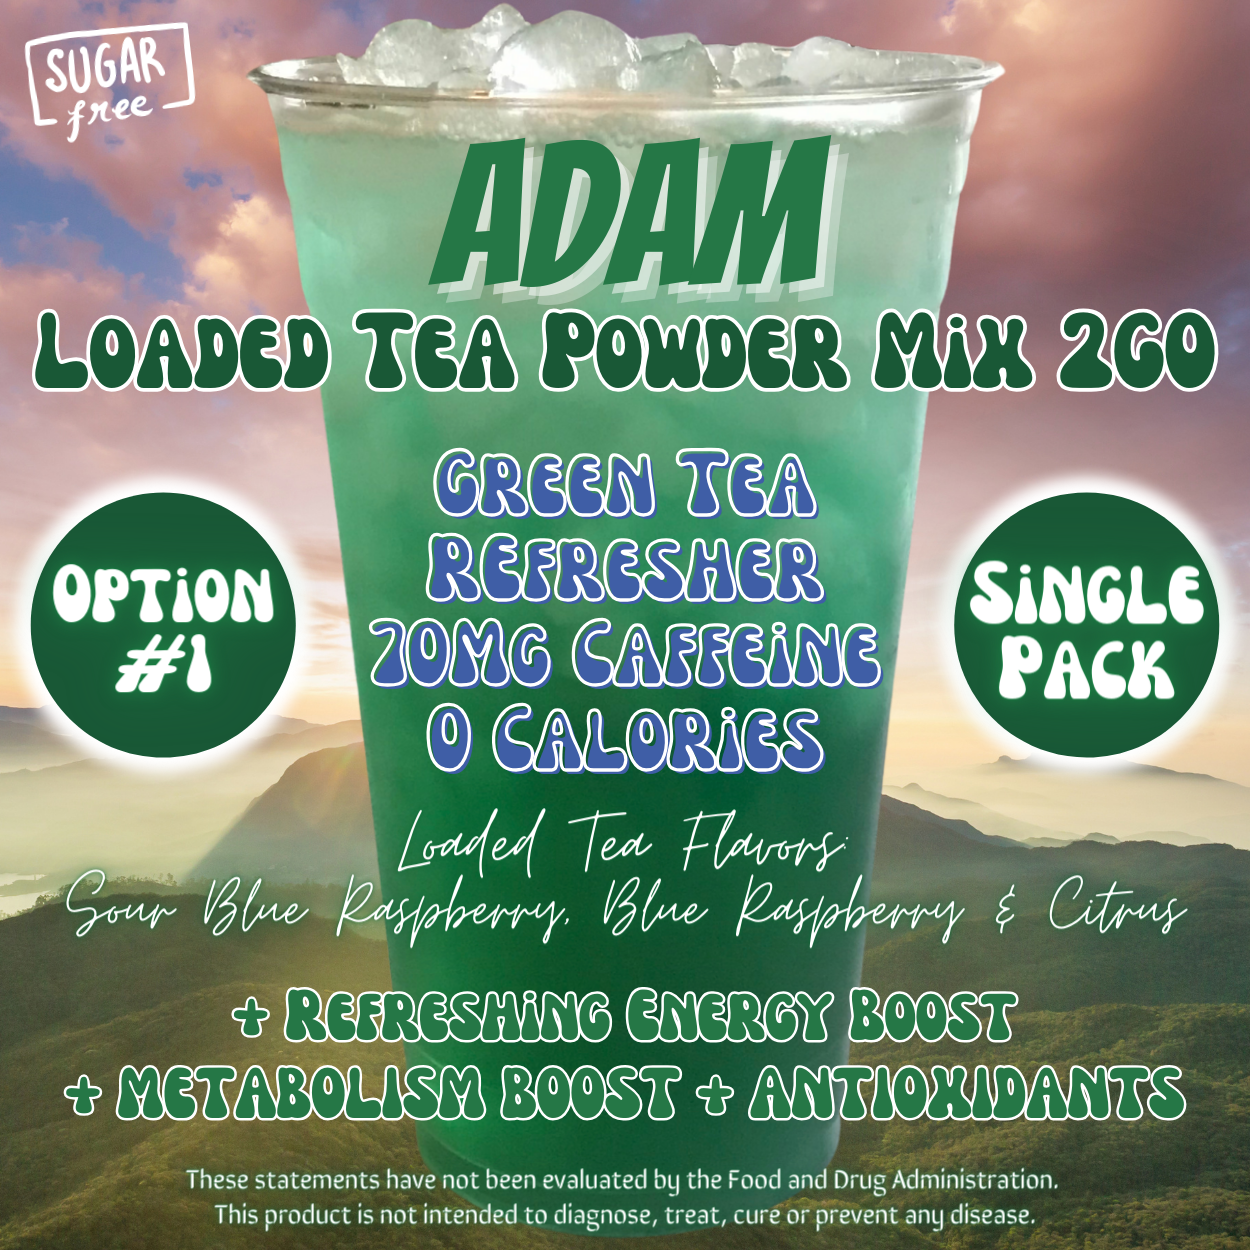 Adam: Loaded Tea Powder Mix 2GO Packets